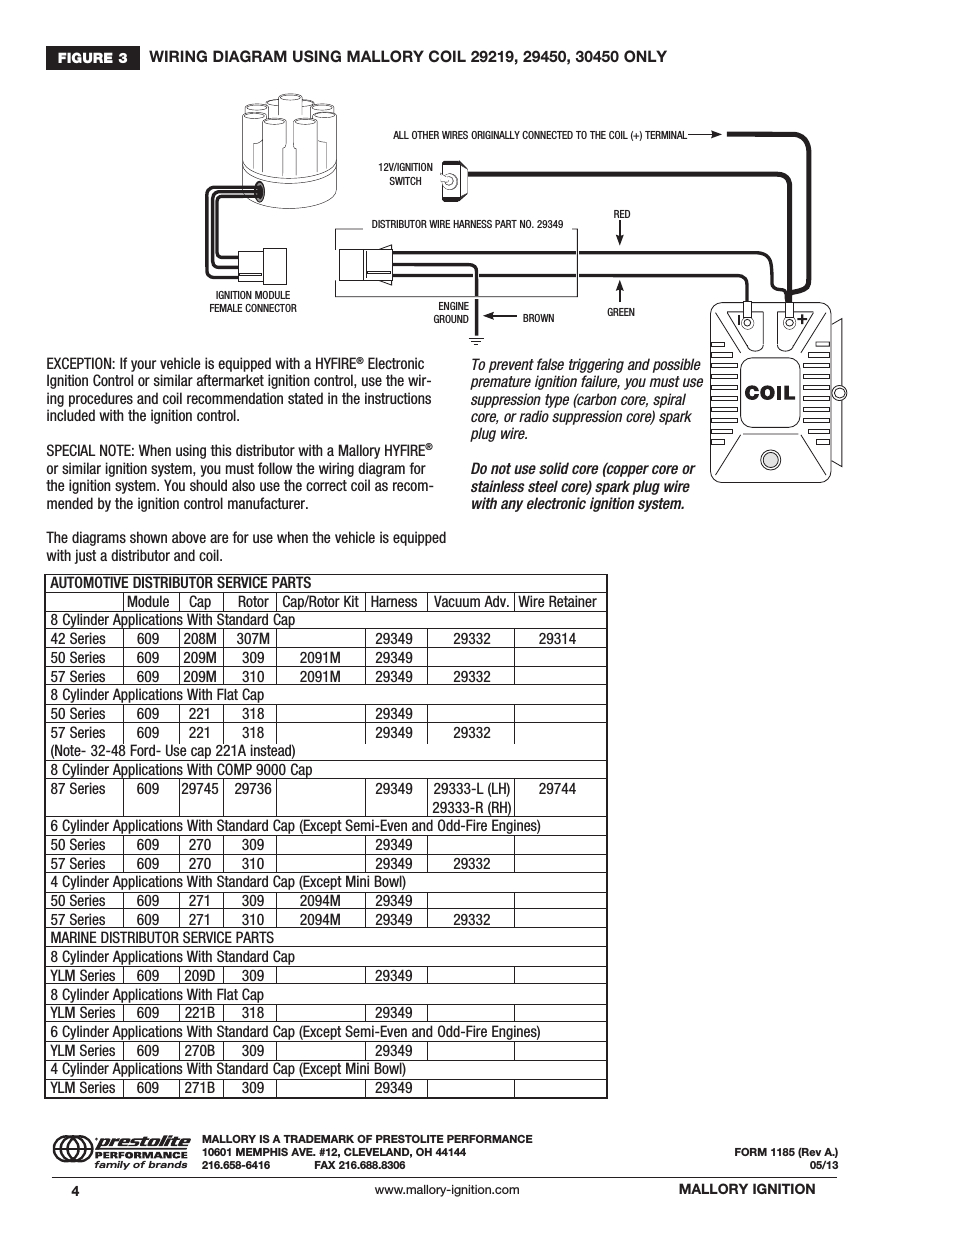 Mallory Magnetic Breakerless Wiring Diagram | Manual E-Books - Mallory Magnetic Breakerless Distributor Wiring Diagram